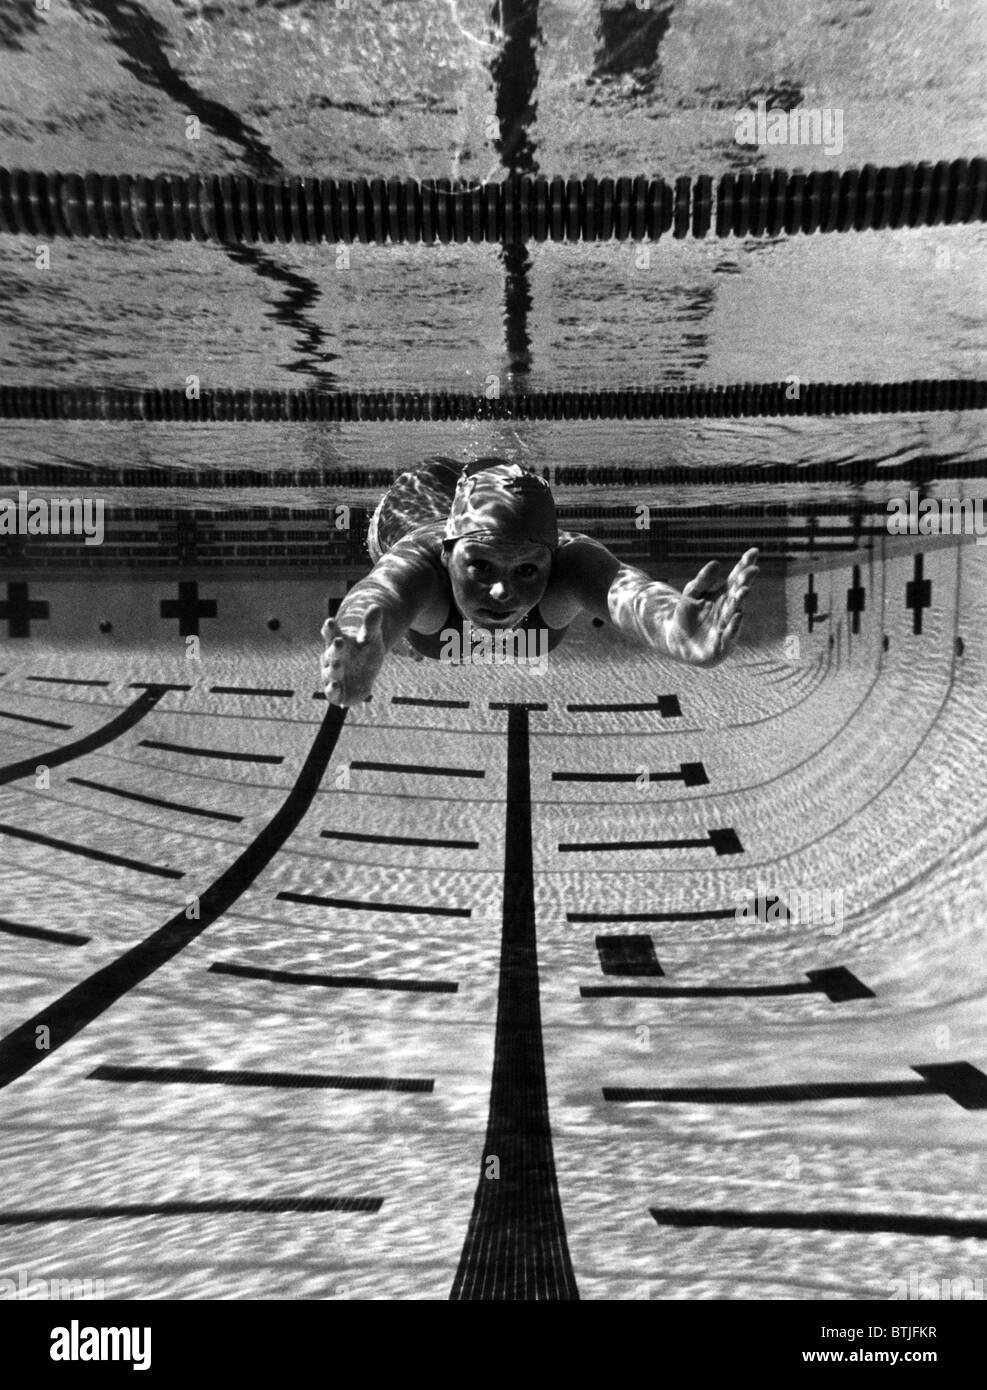 Olympian Shirley Babashoff, 1976. Courtesy: CSU Archives/Everett Collection Stock Photo